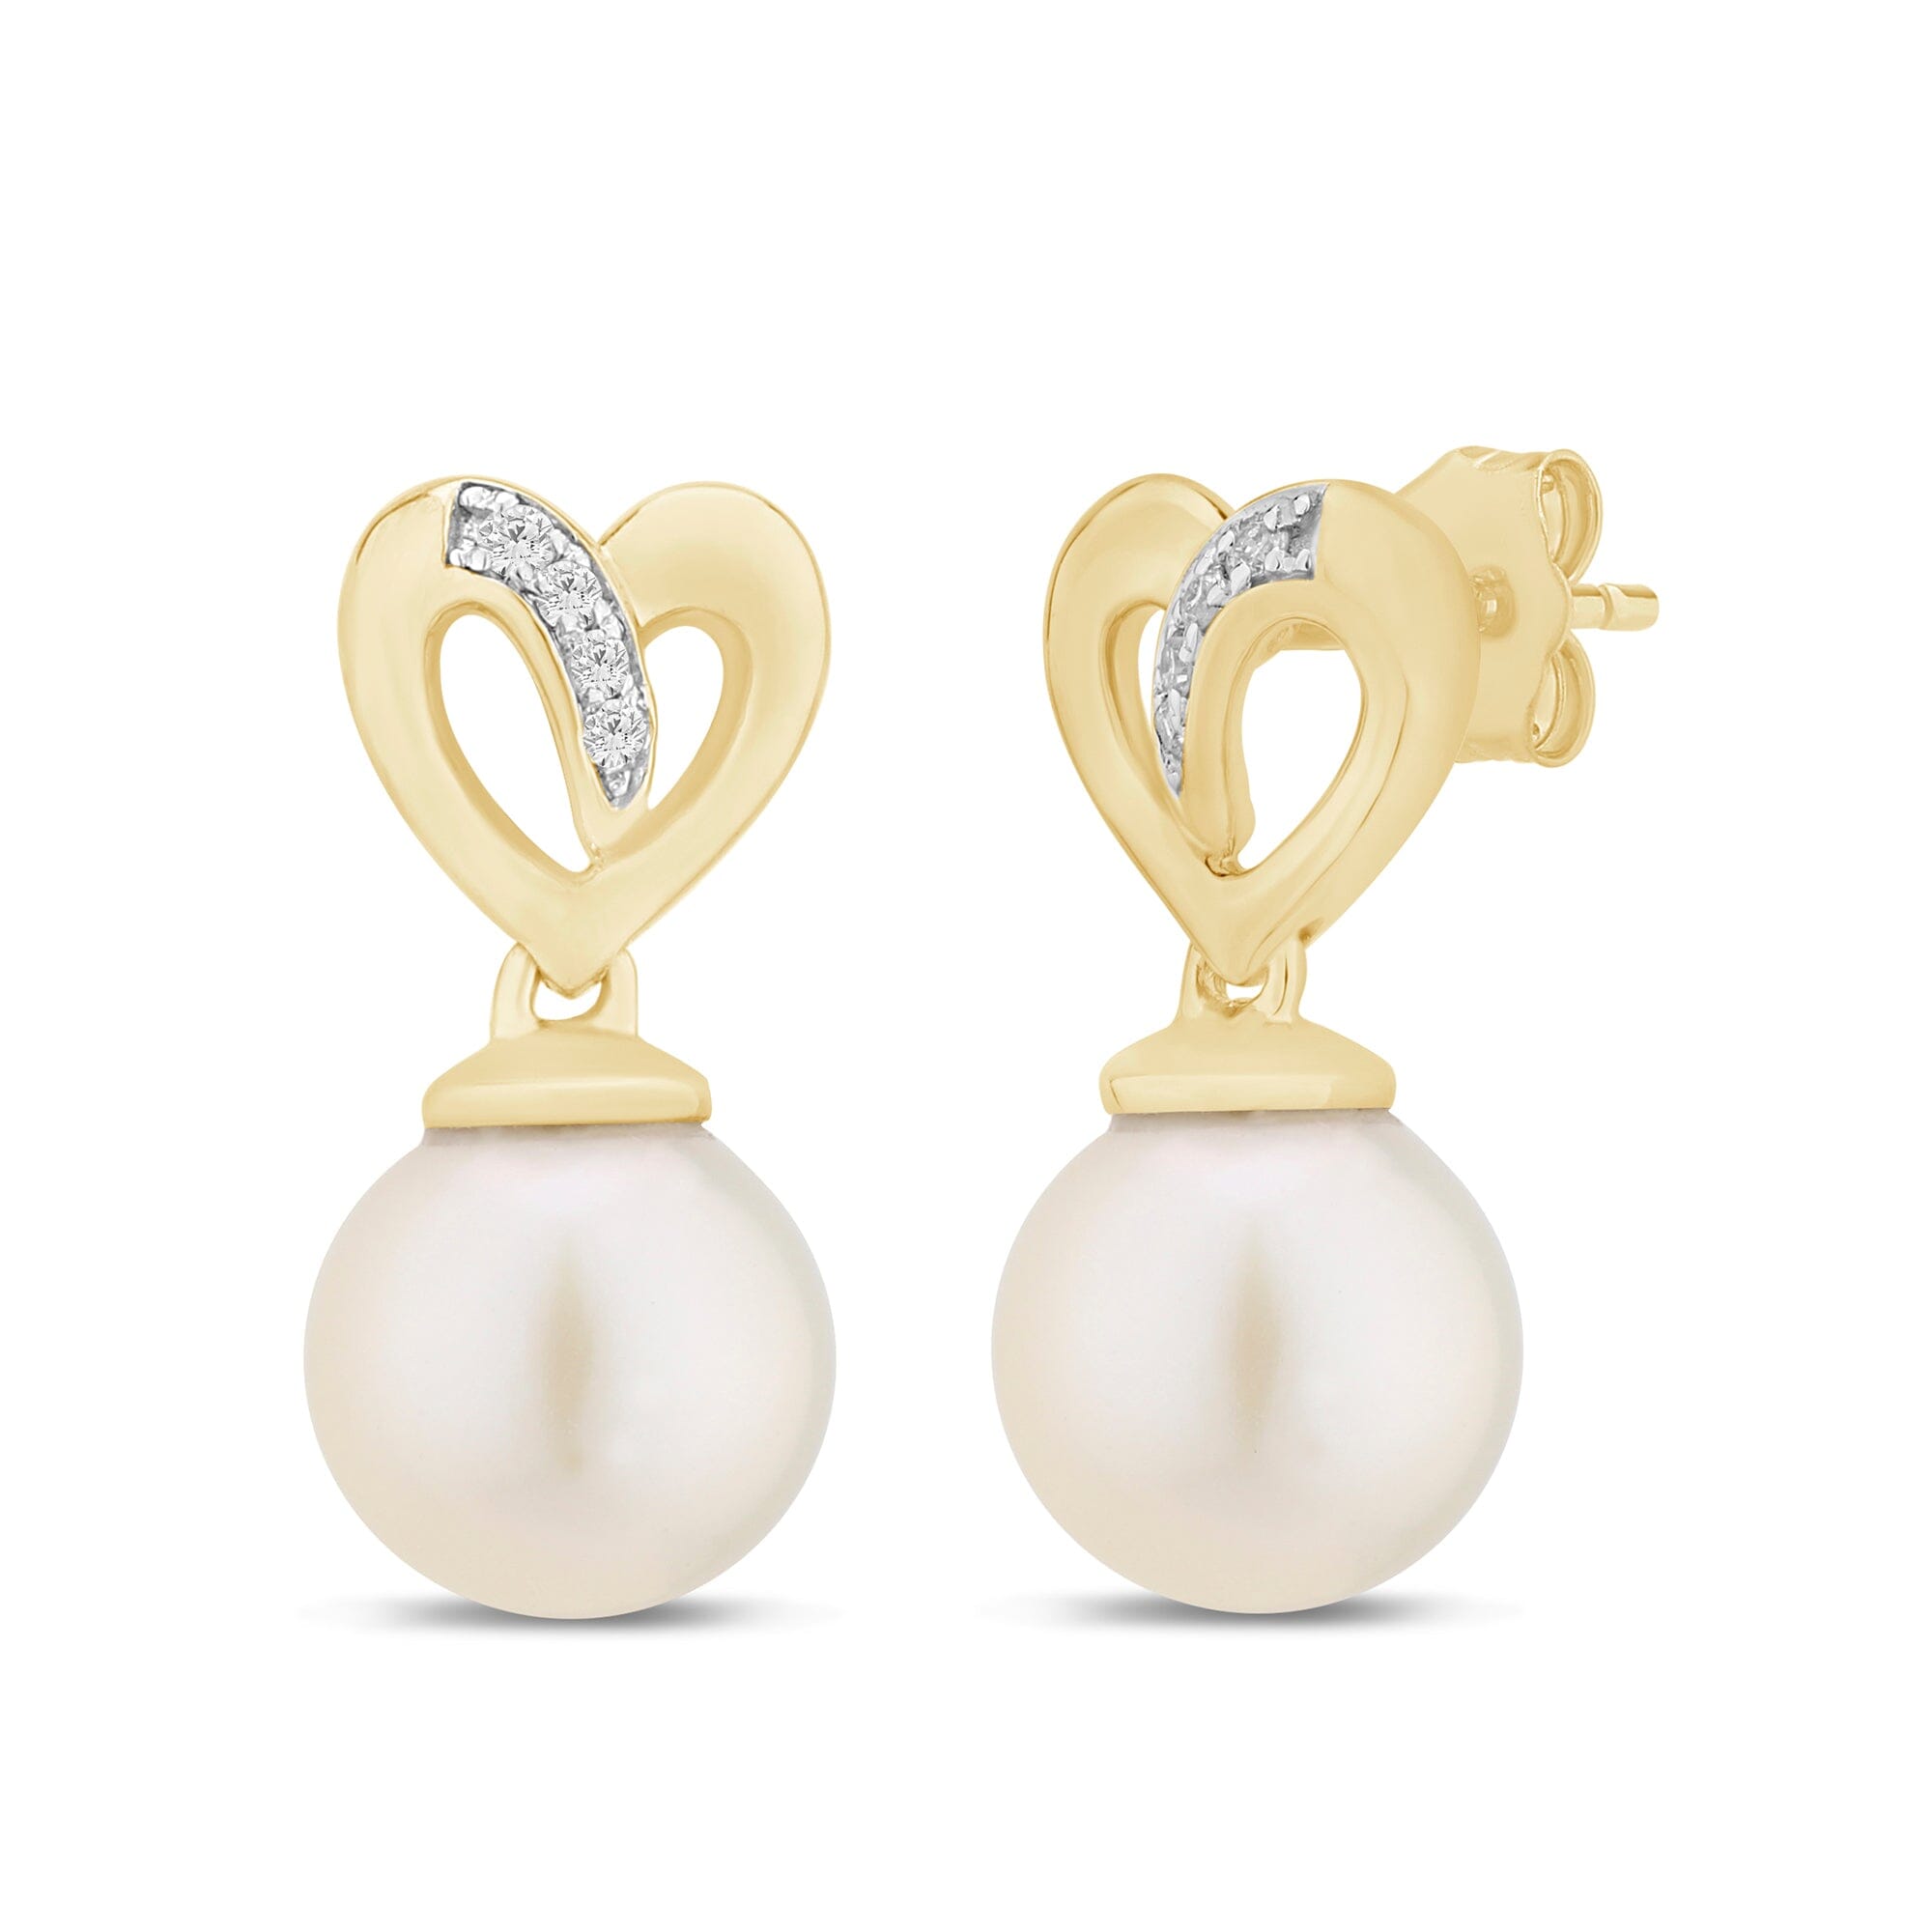 Diamond Set Pearl and Heart Stud Earrings in 9ct Yellow Gold Earrings Bevilles 